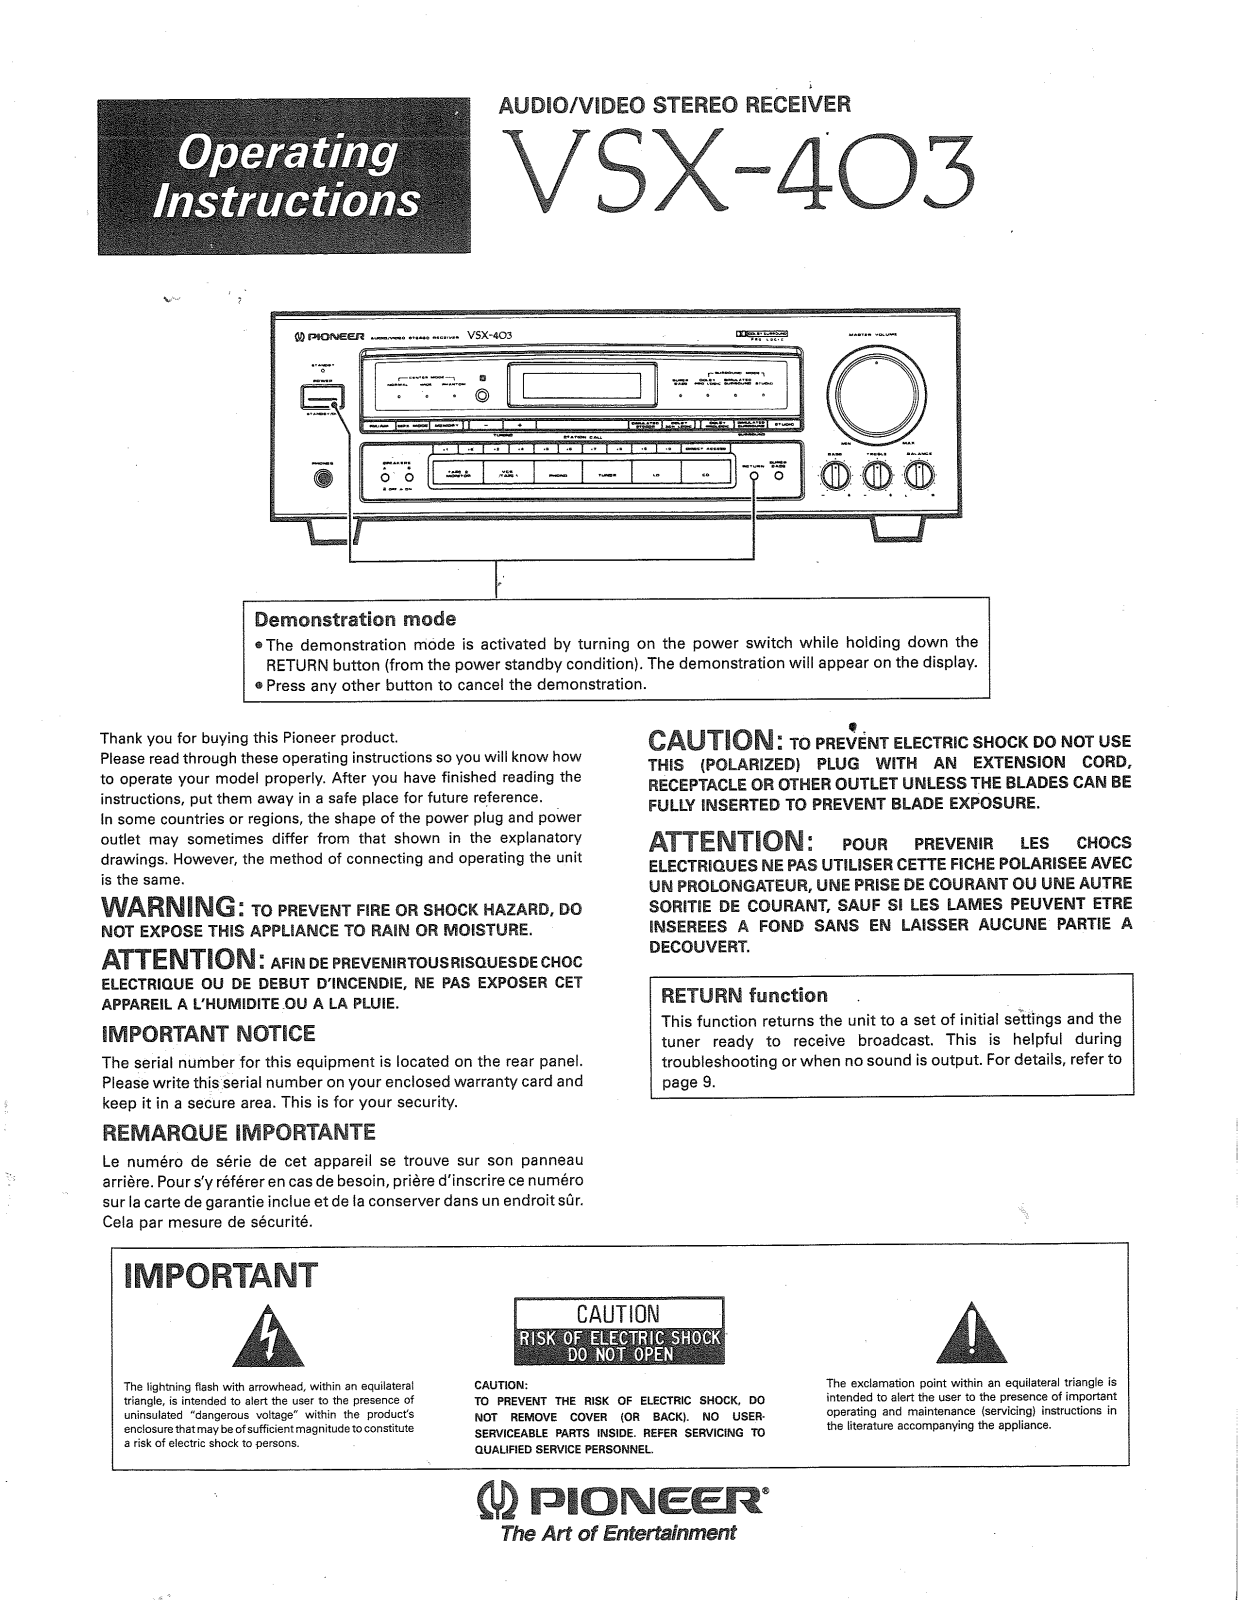 Pioneer VSX-403 Service manual